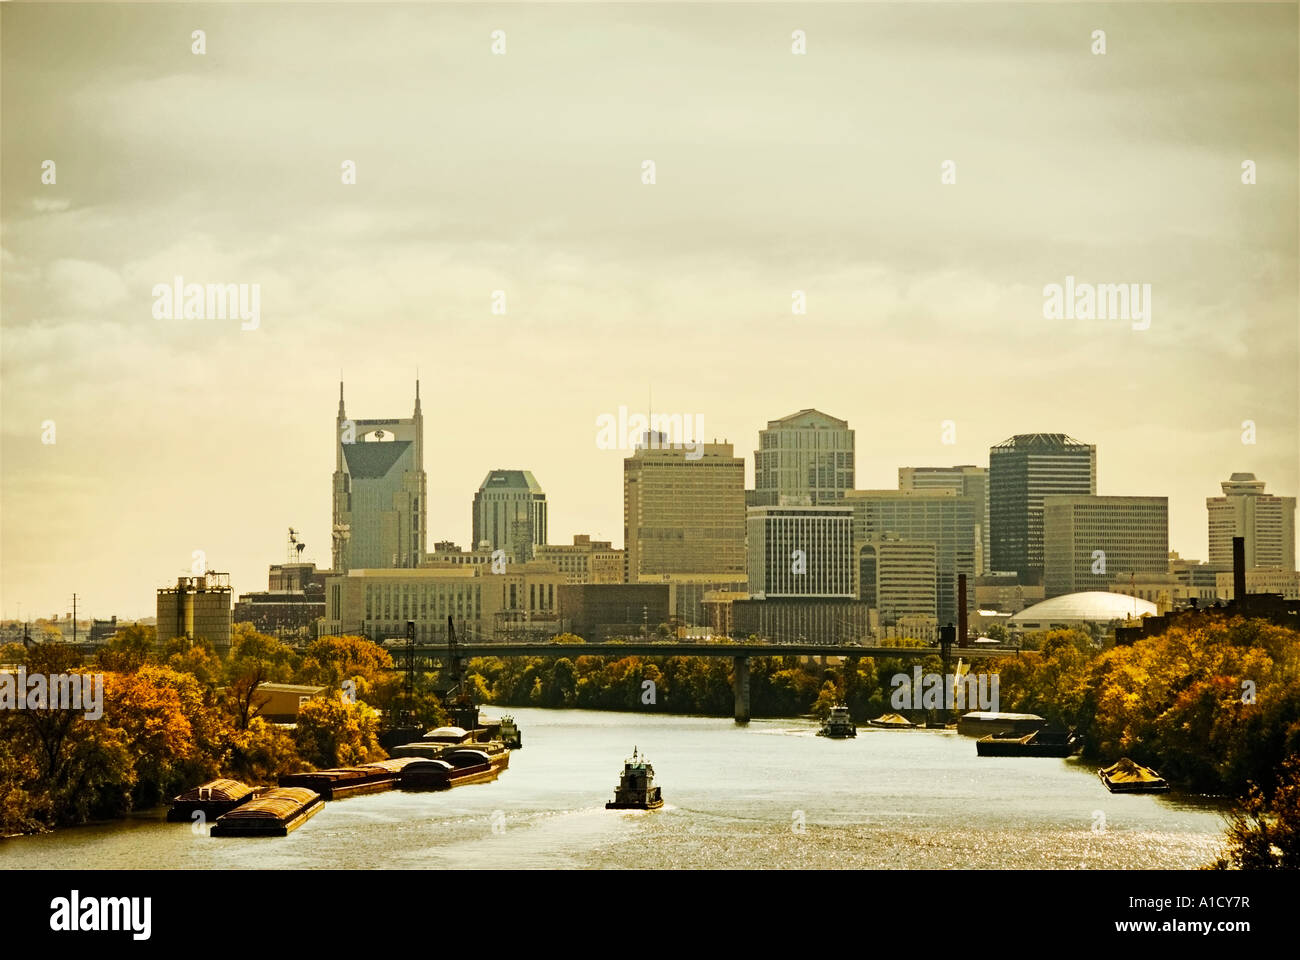 Nashville Tennessee skyline 2006 Stock Photo - Alamy